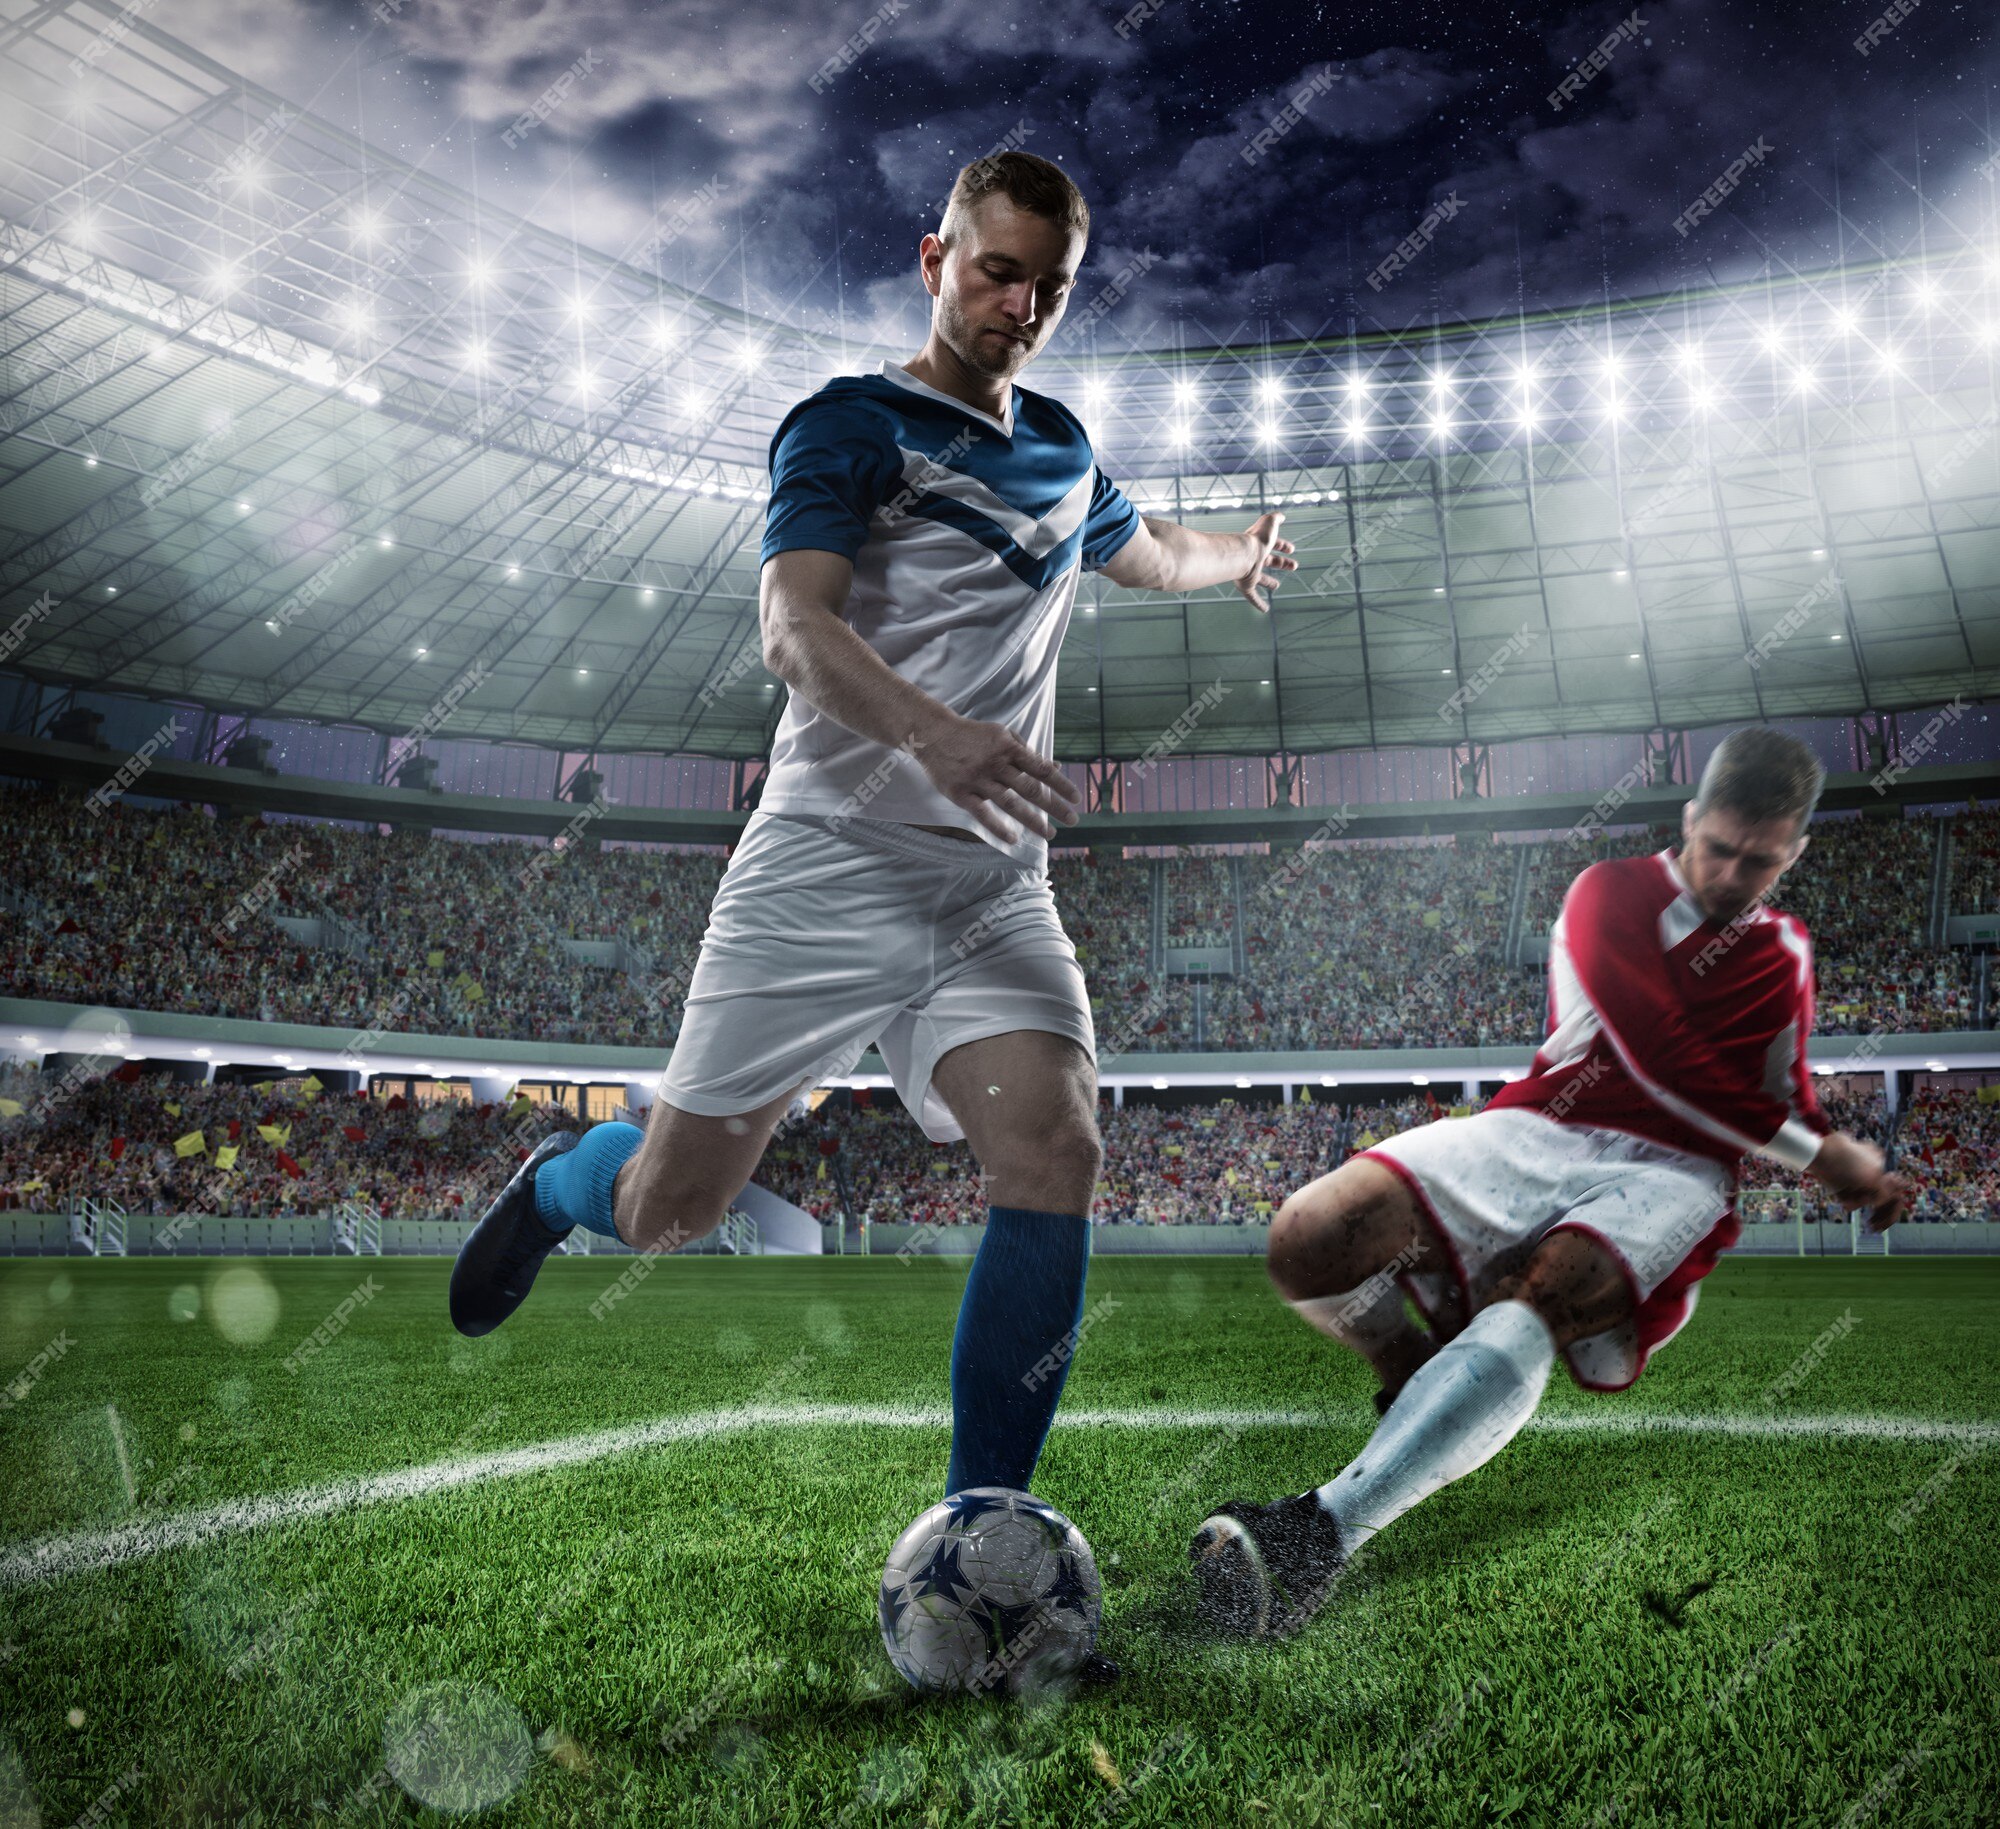 Free Kick Football - Click Jogos